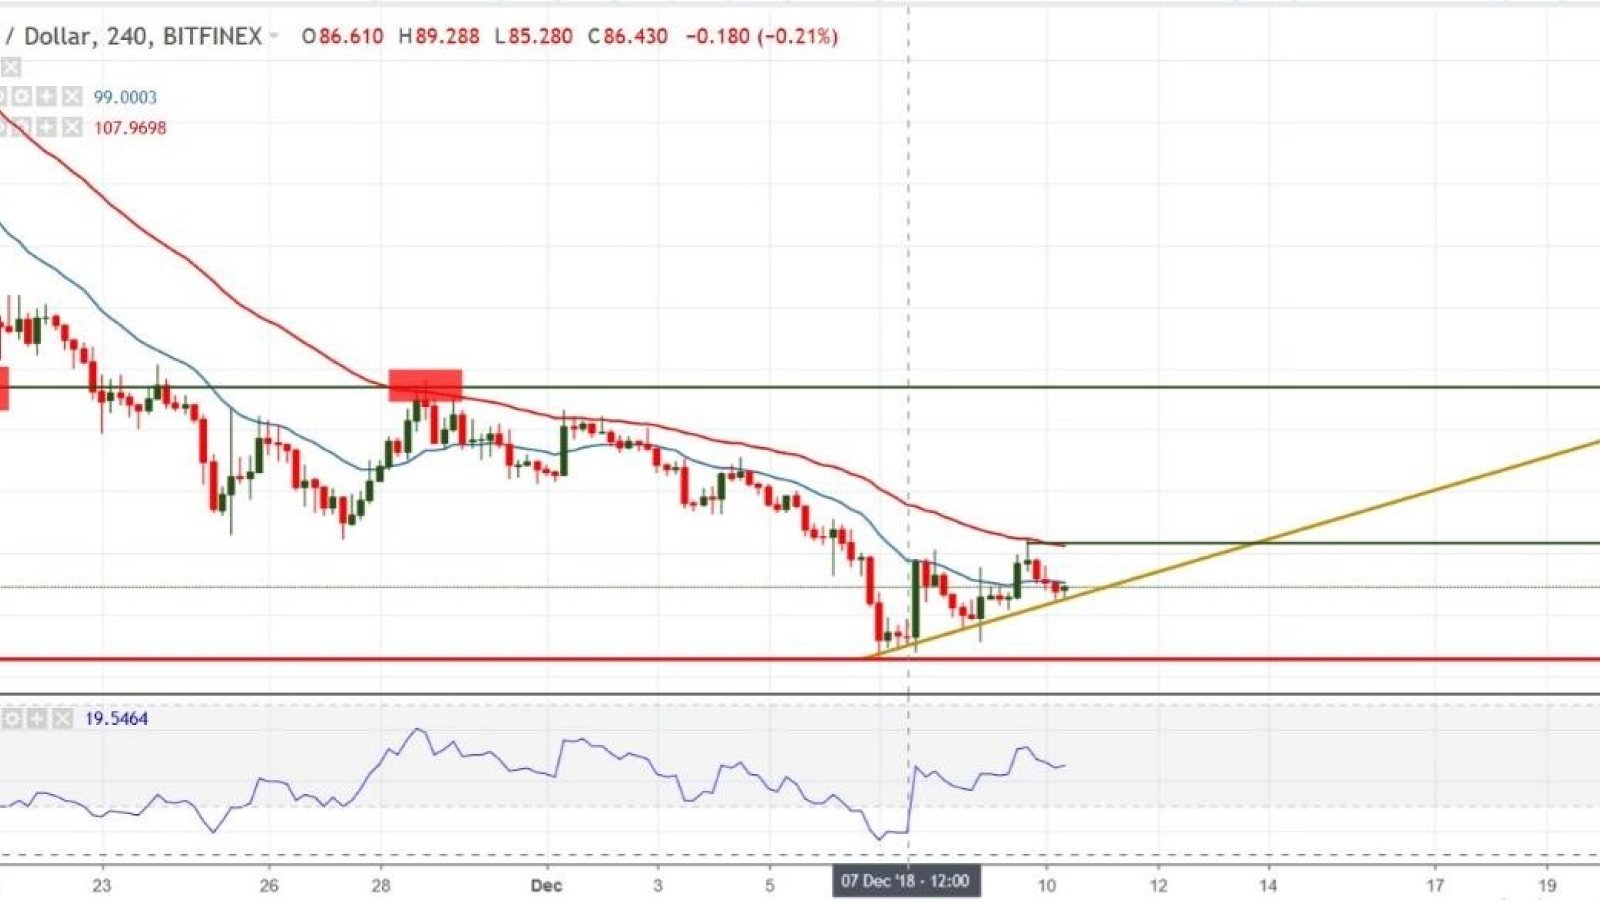 Chart Analysis – ETH/USD